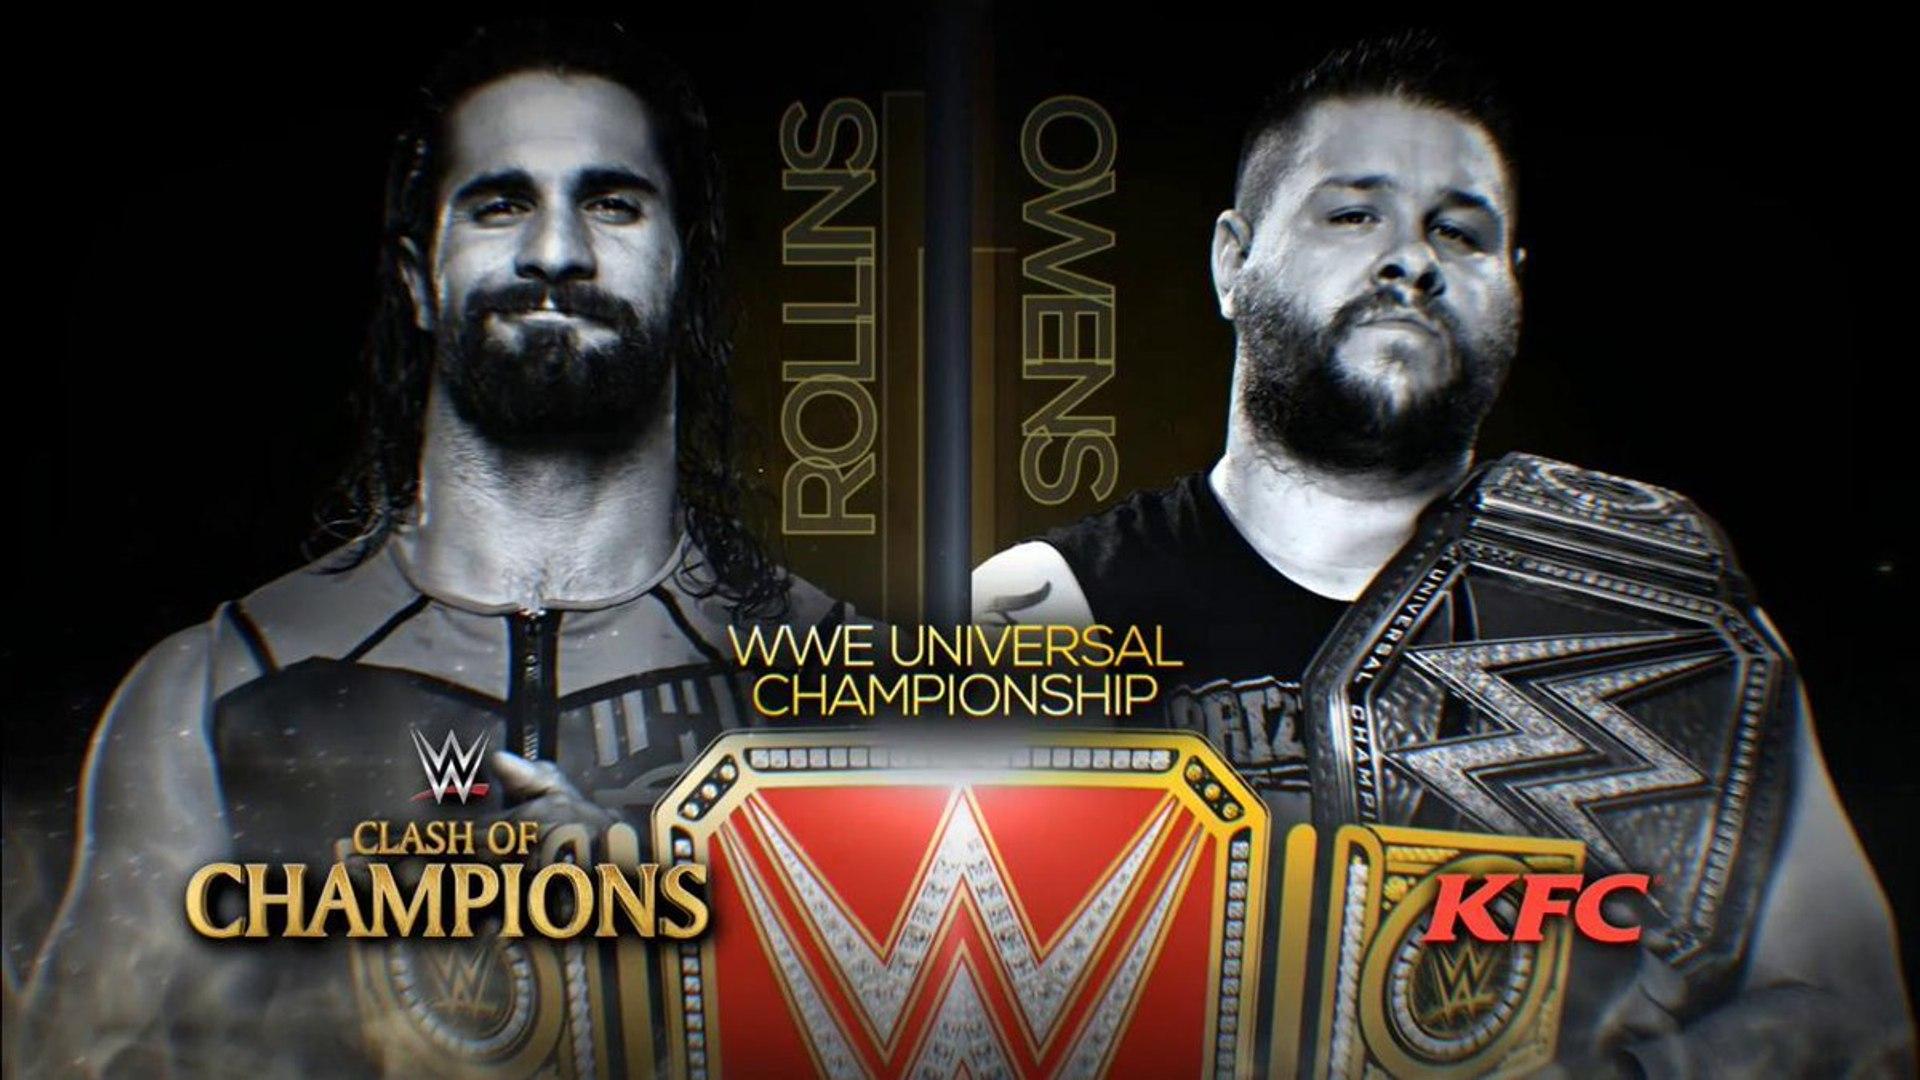 Kevin Owens vs Seth Rollins of Champions 2016